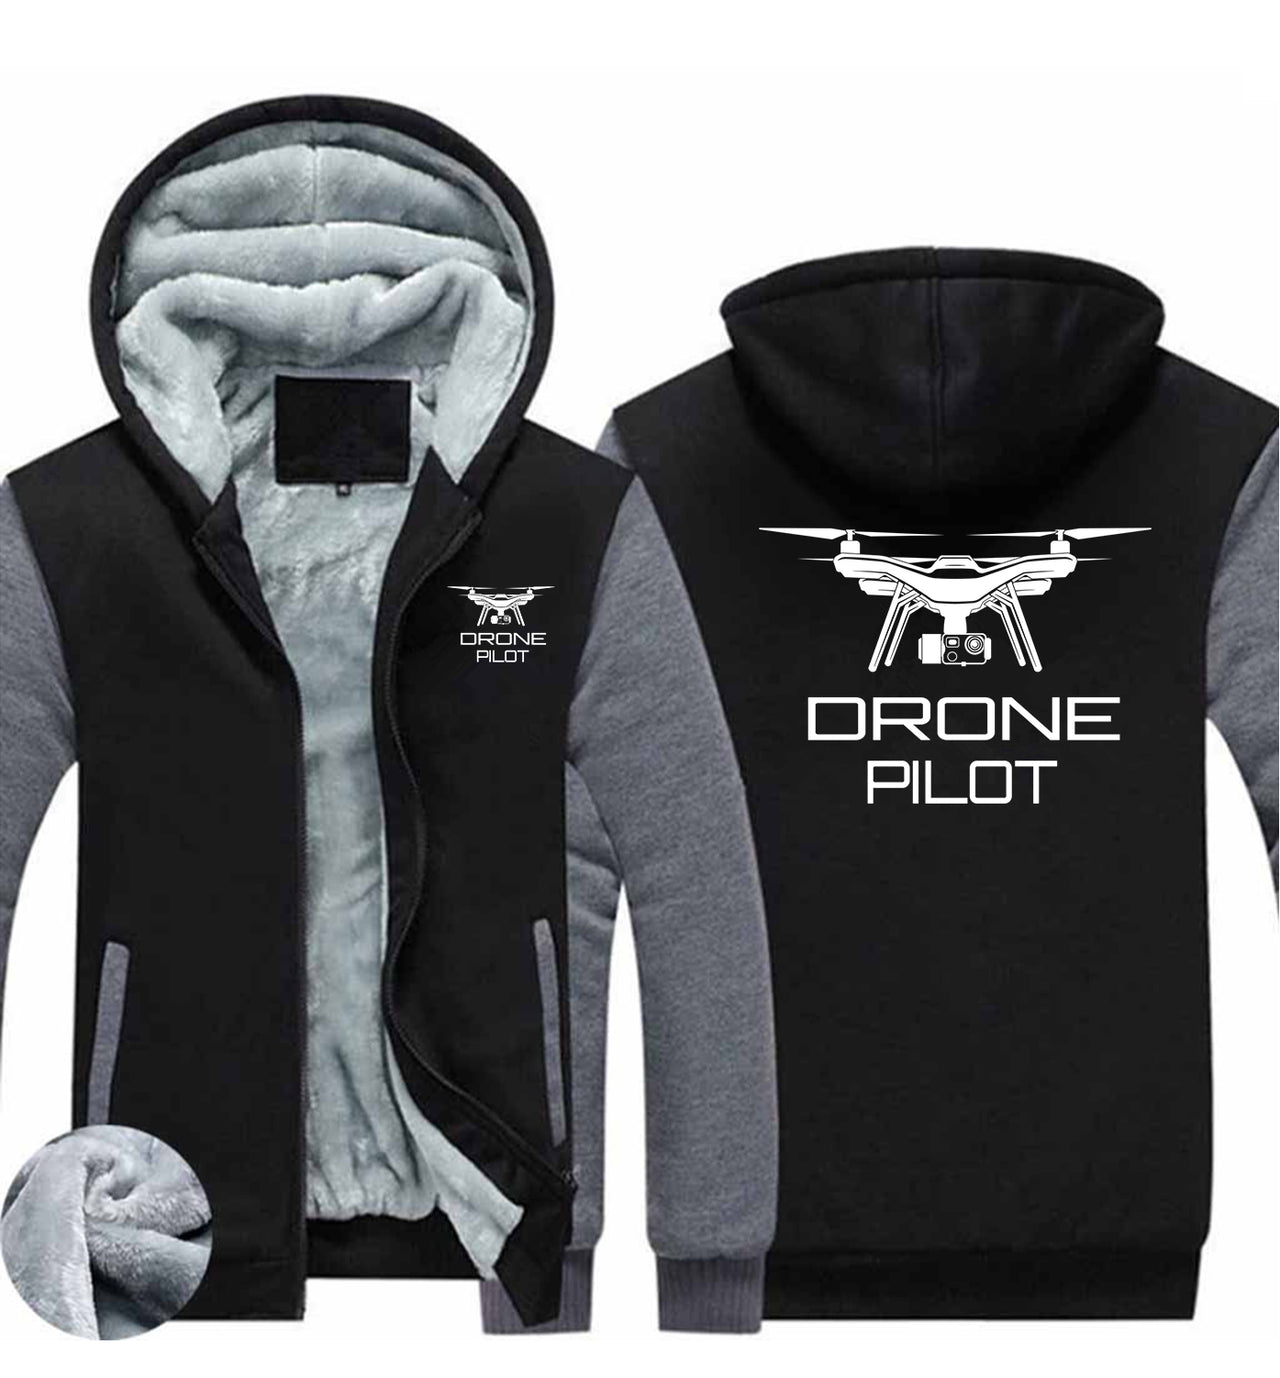 Drone Pilot Designed Zipped Sweatshirts